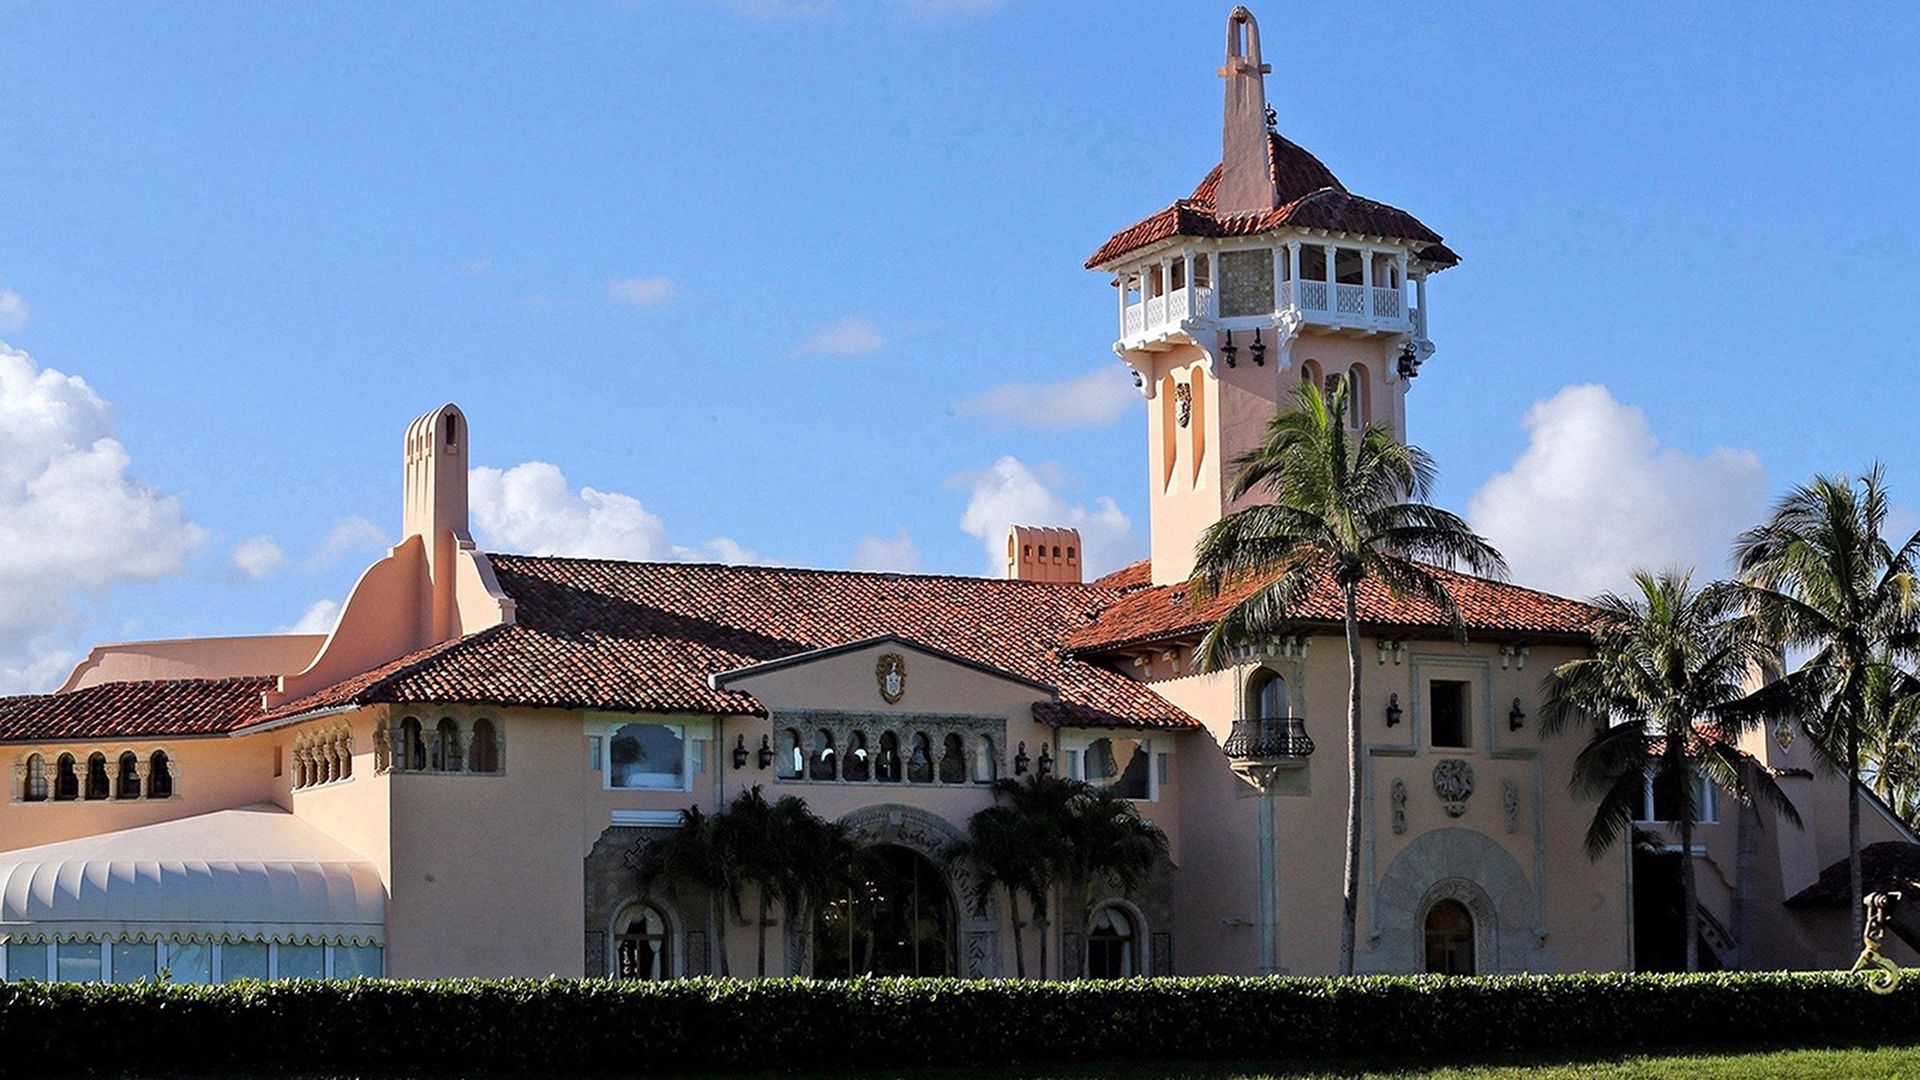 Former President Donald Trump's Mar-a-Lago resort in Palm Beach, Florida